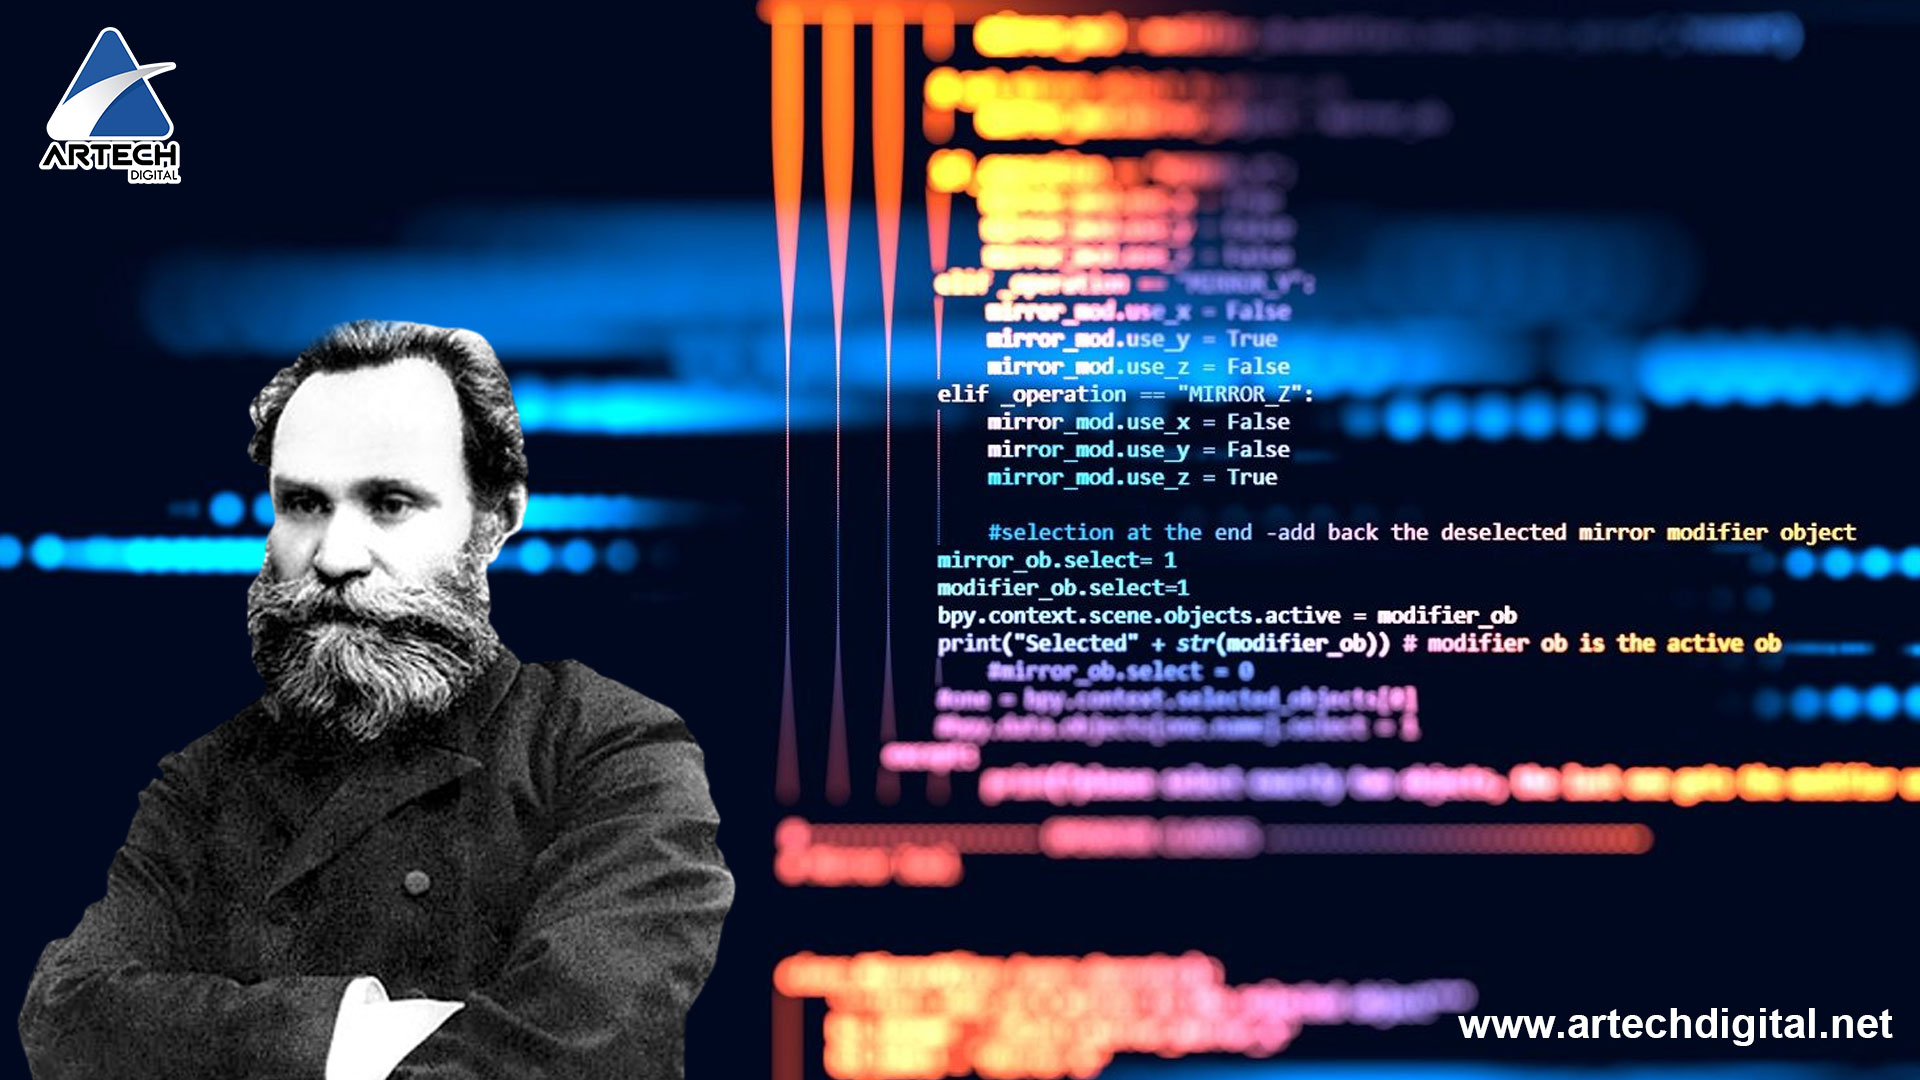 Discover how the Ivan Pavlov-inspired algorithm works